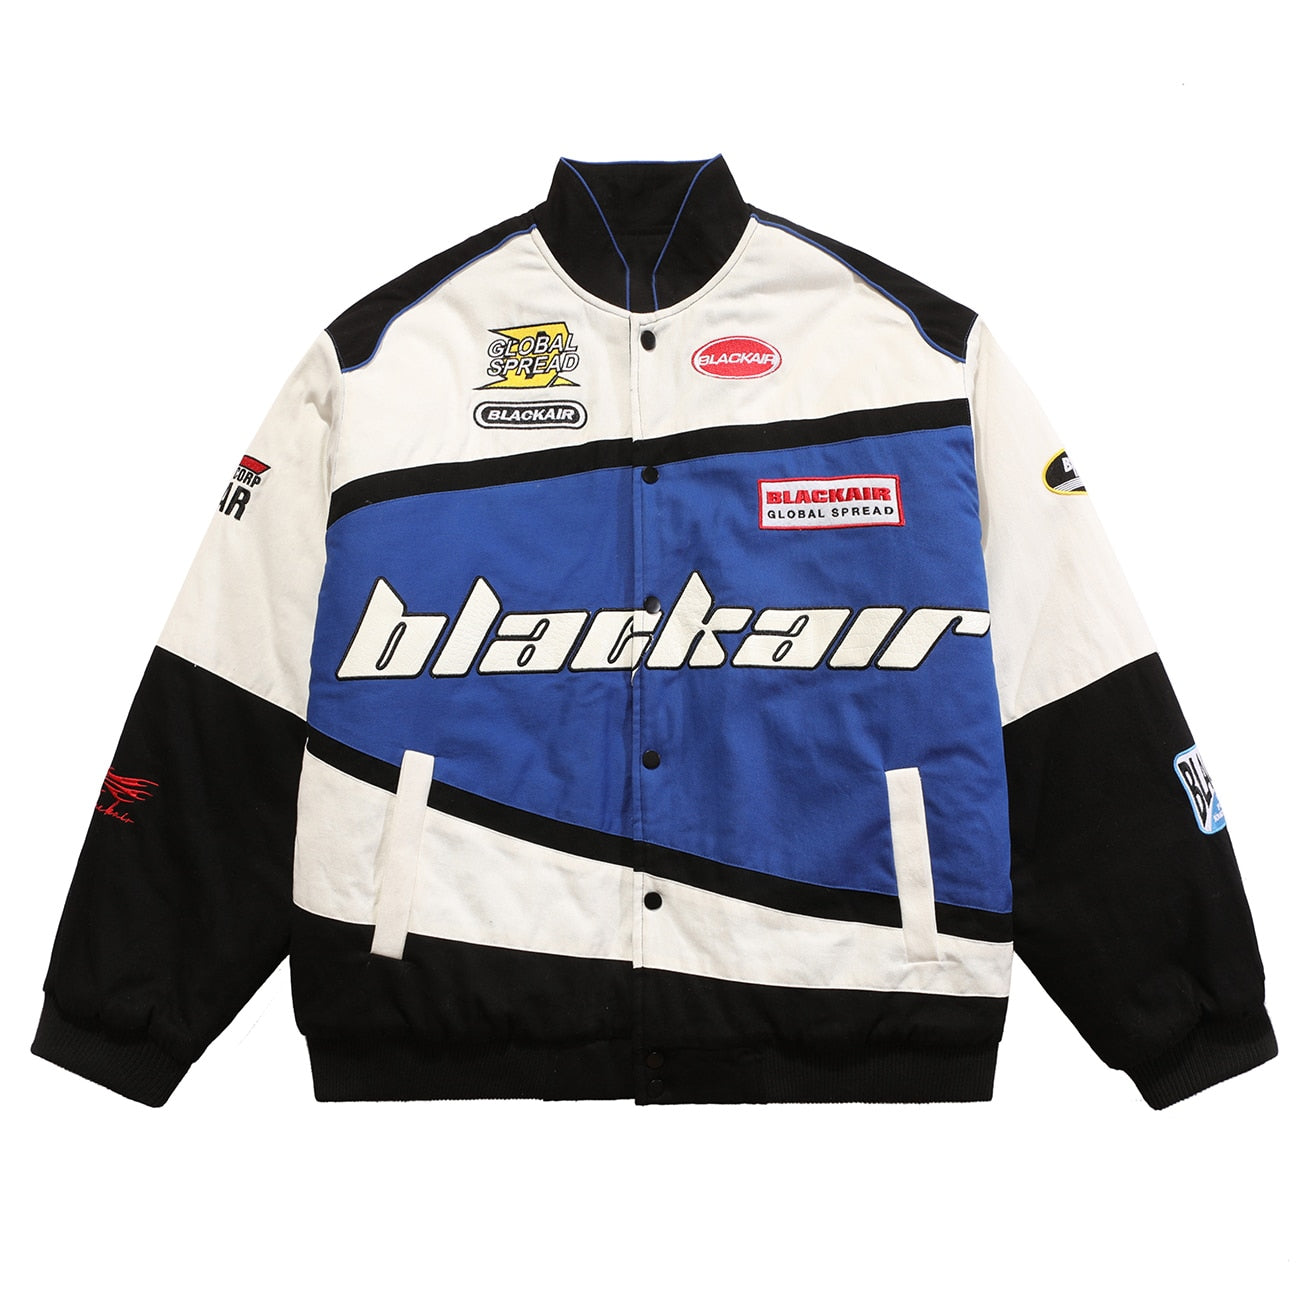 haruja - Baseball "BLACKAIR" Racing blue Jacket